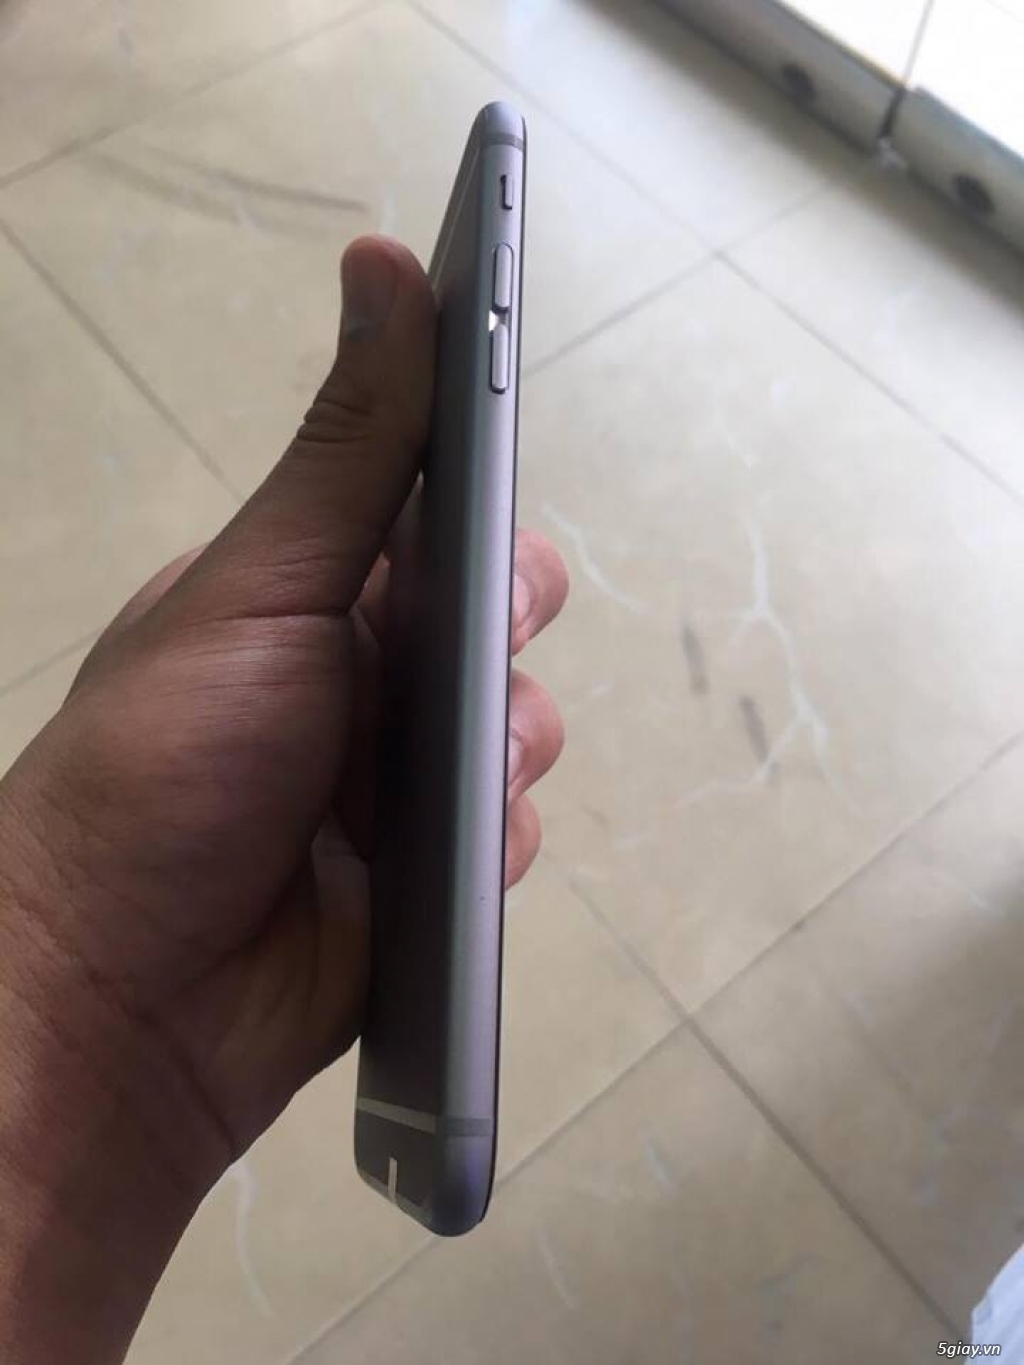 iphone 6+ gray 64gb quốc tế - 6